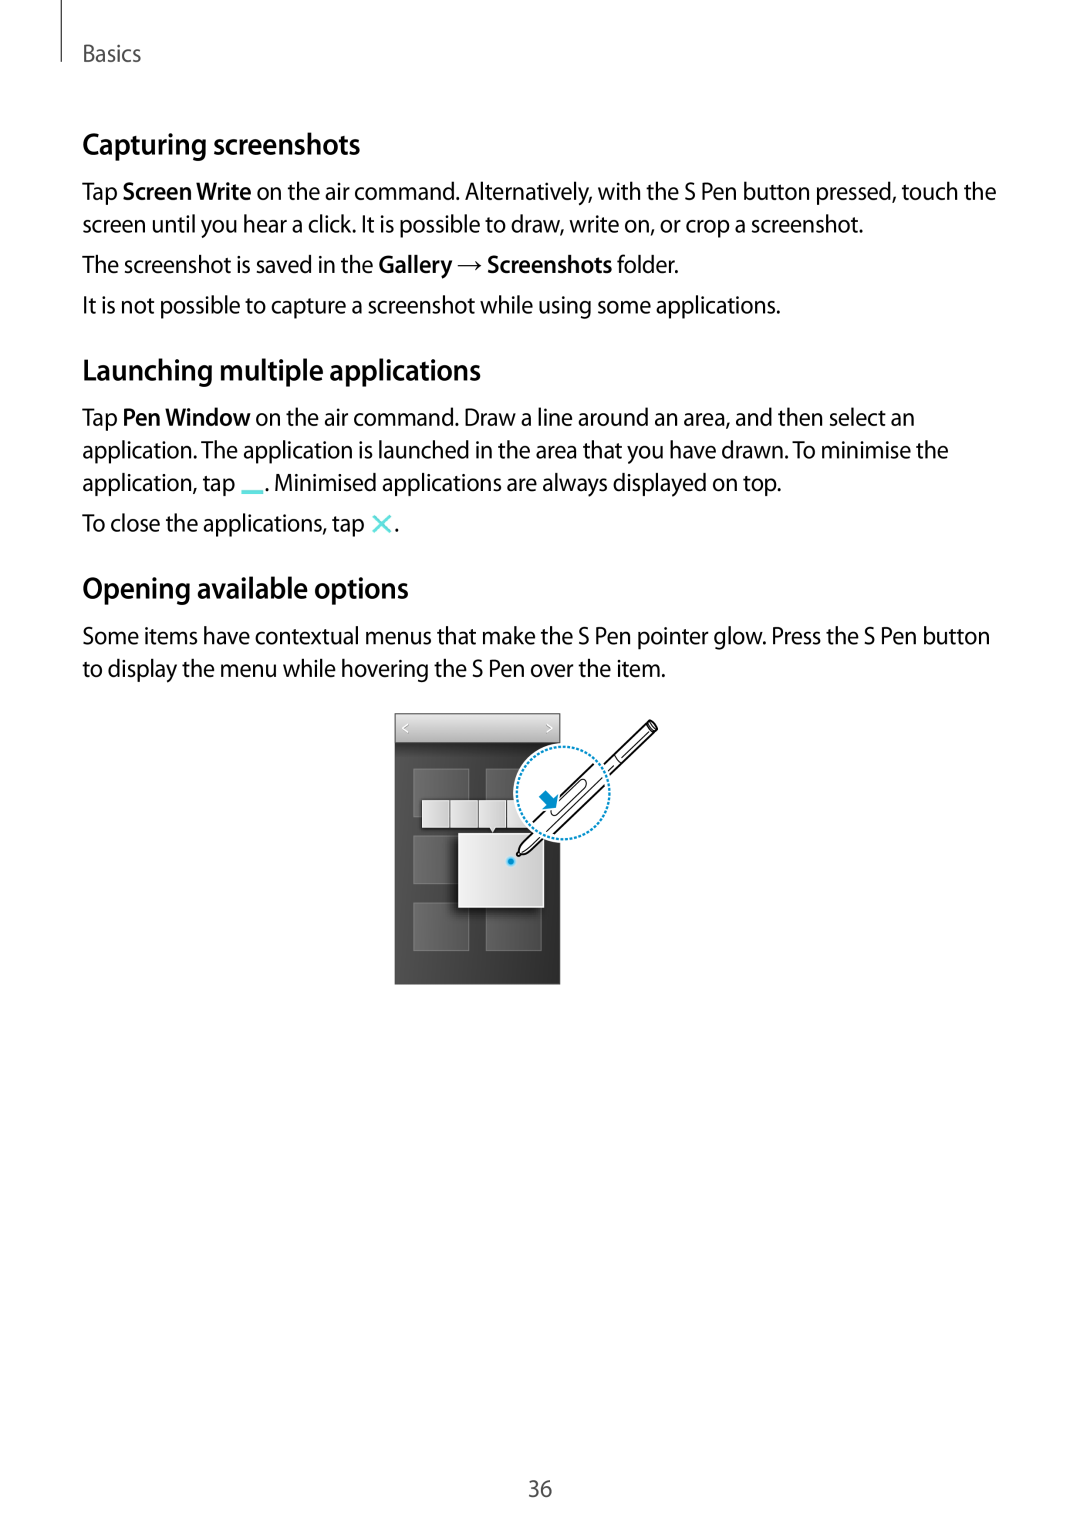 Samsung SM-N9005ZIEKSA manual Capturing screenshots, Launching multiple applications, Opening available options, Basics 